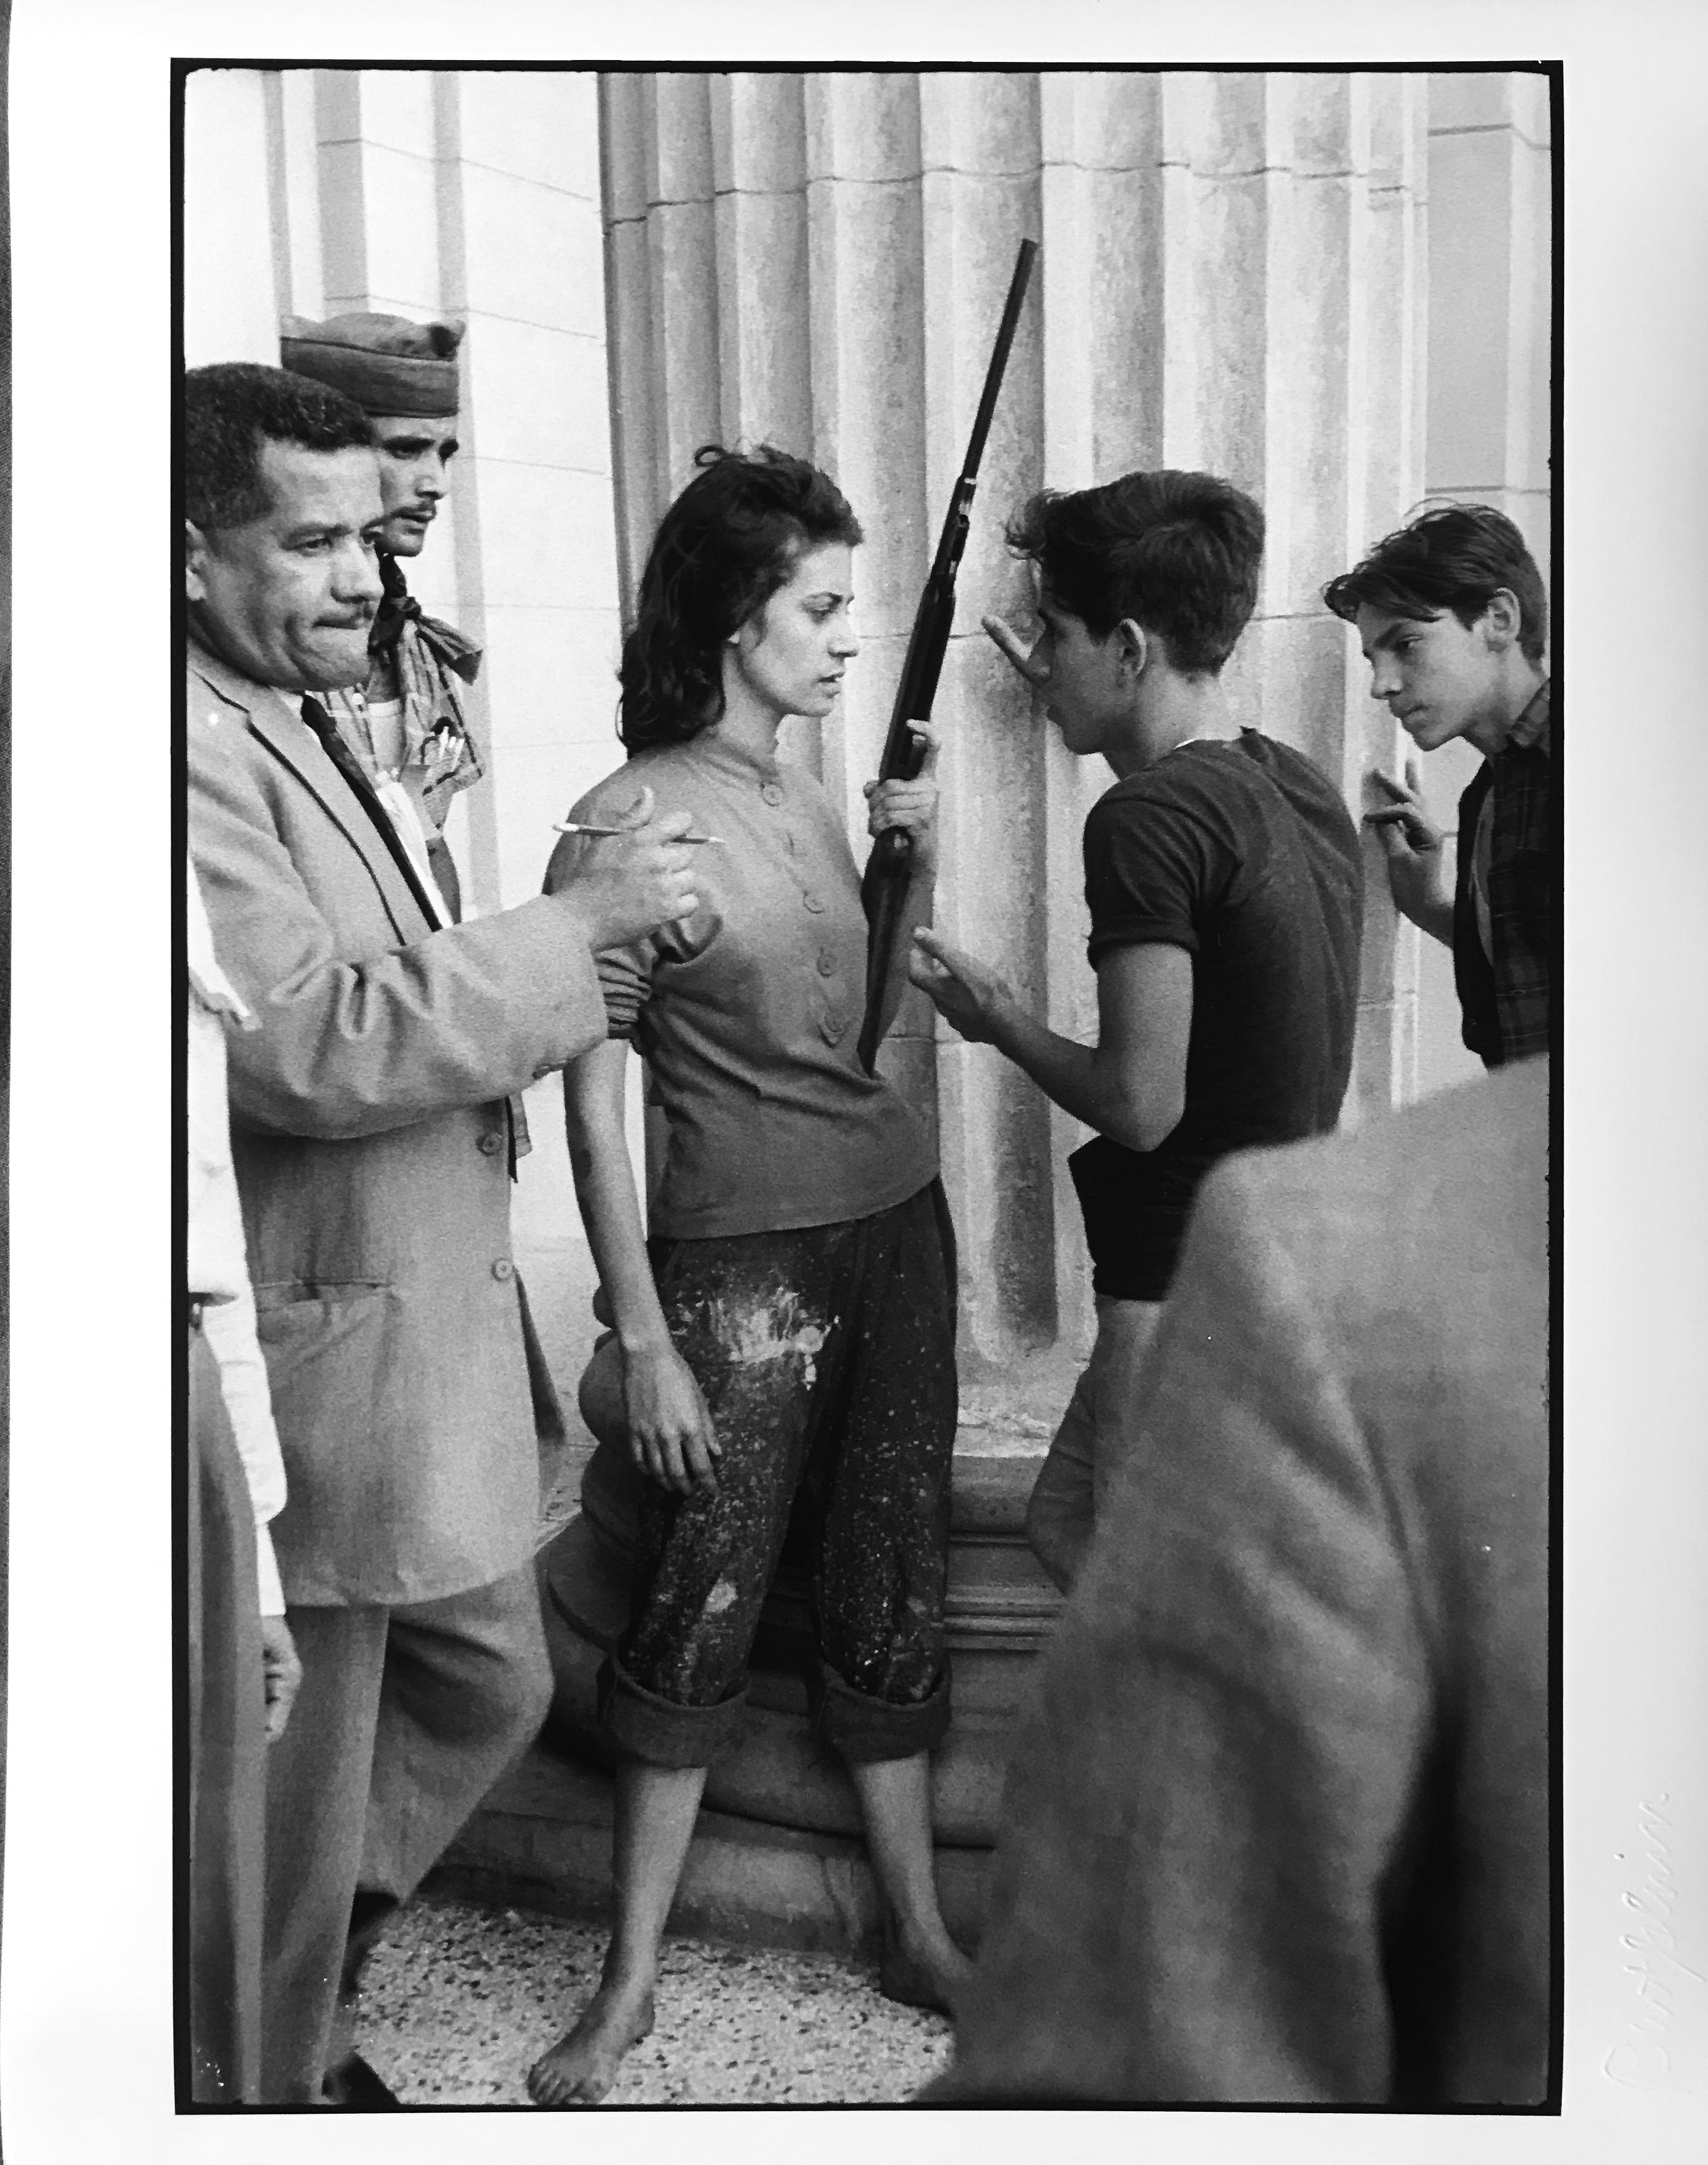 Burt Glinn Black and White Photograph - The Fall of Havana, Black and White Contemporary Photography of Cuba 1950s